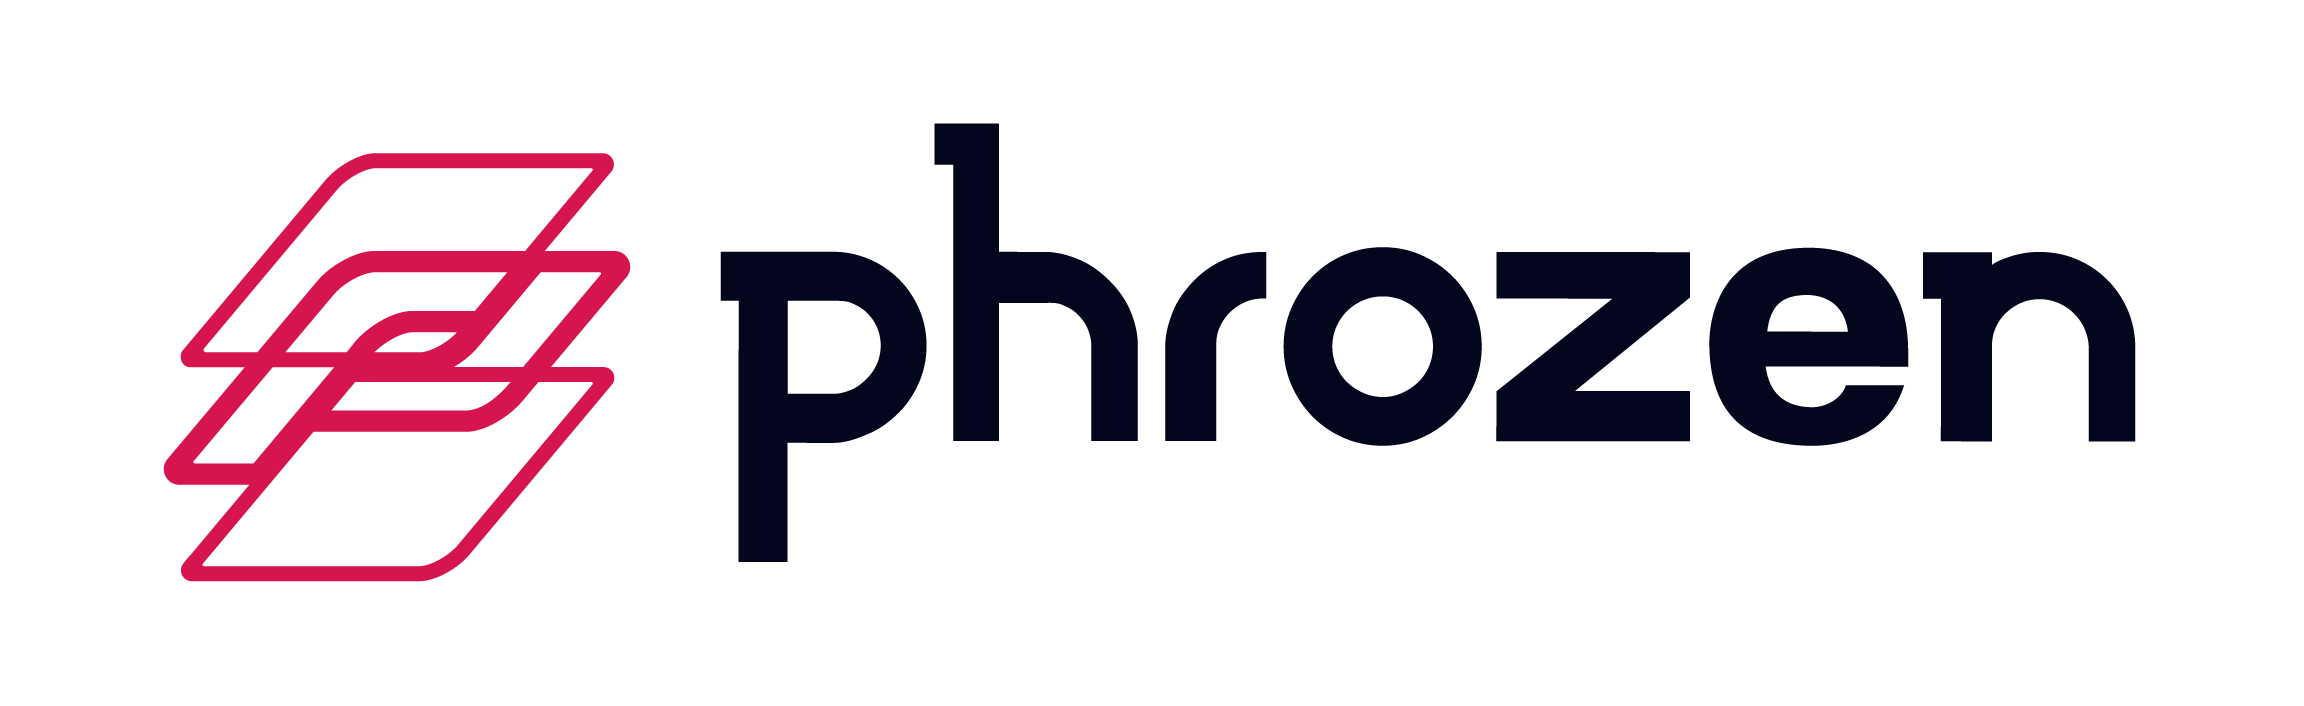 Phrozen Technology